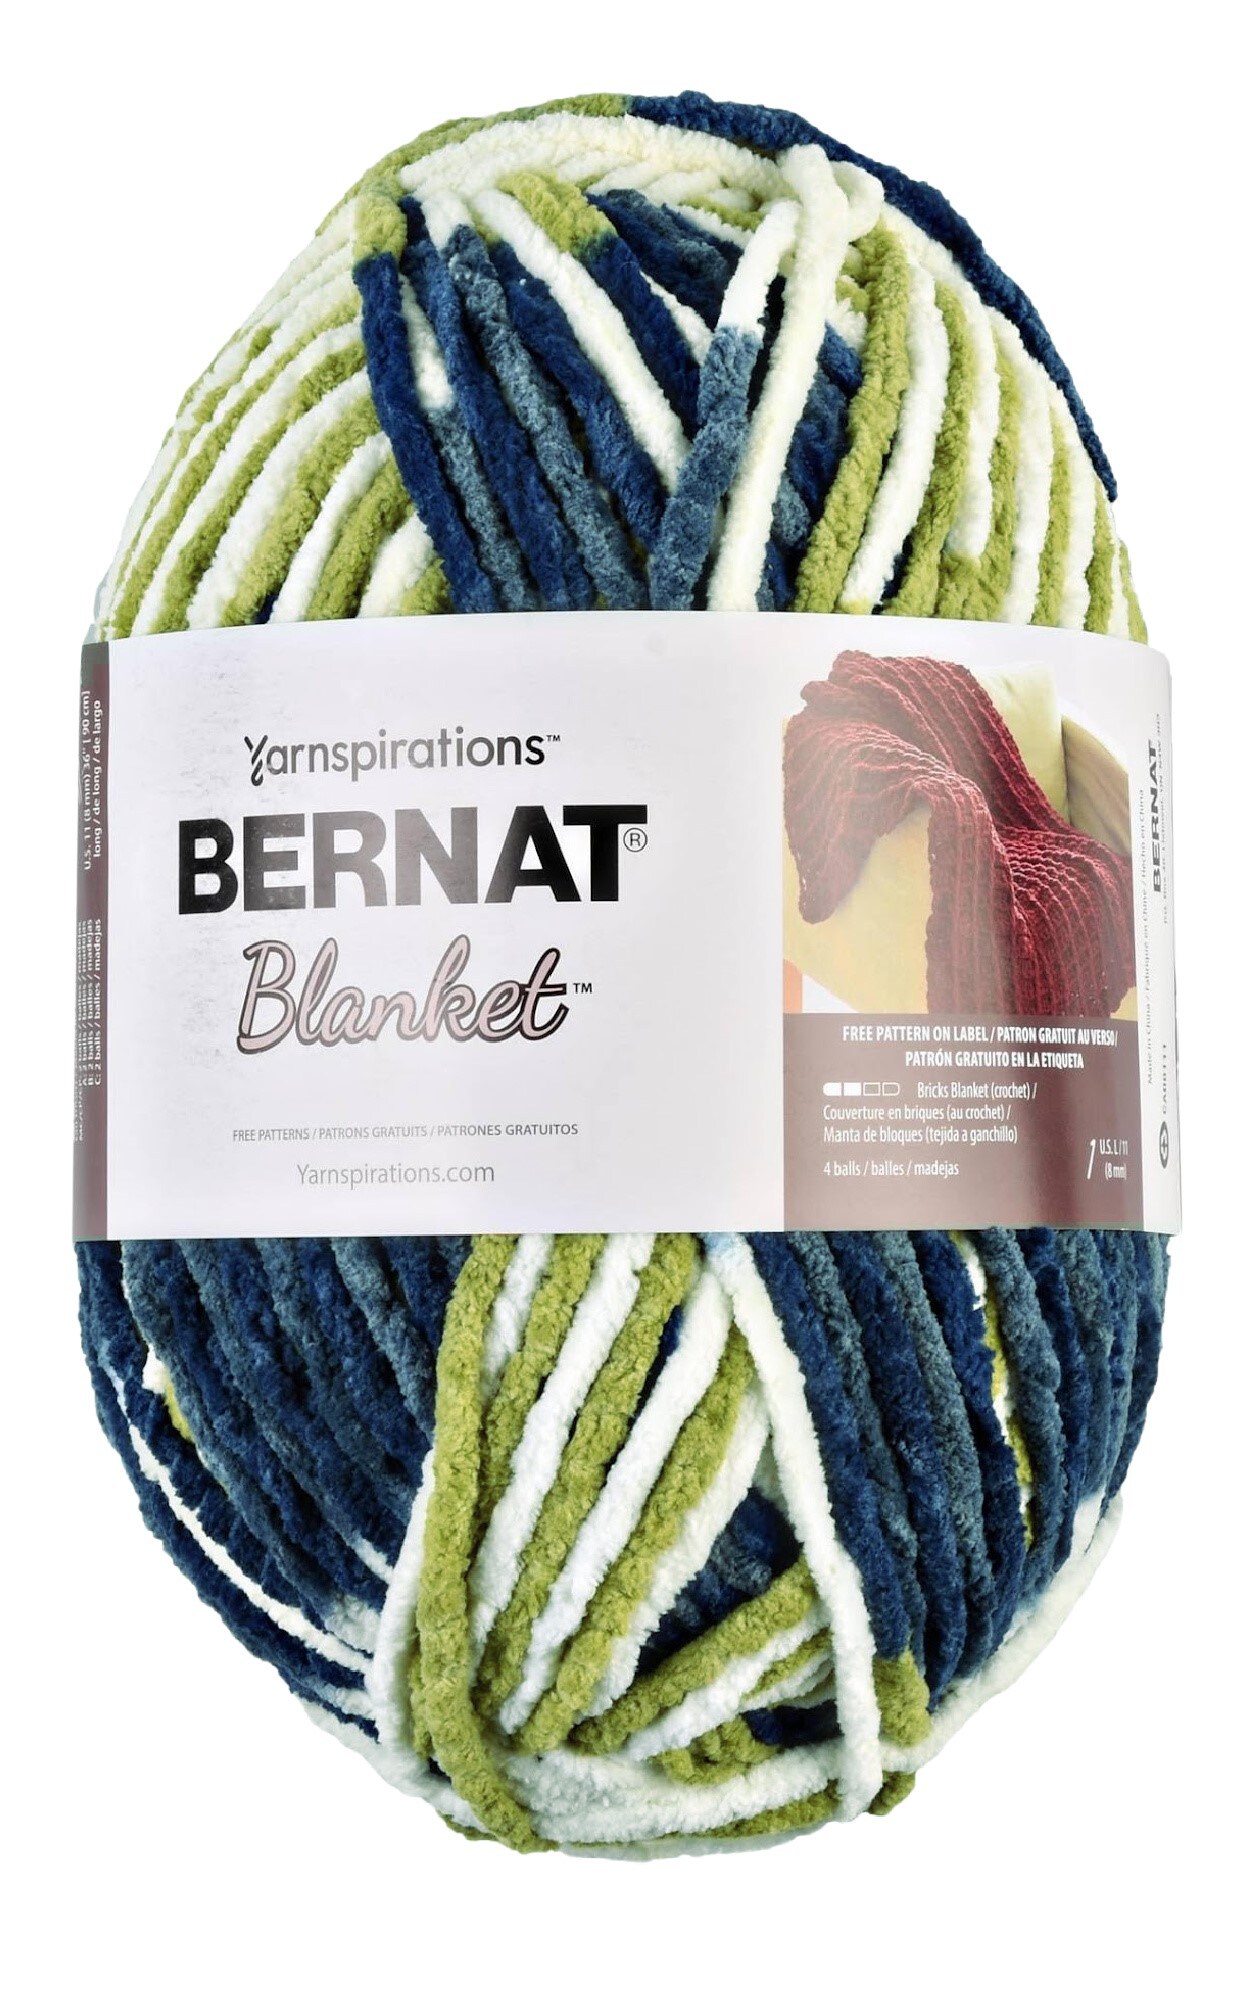 Bernat Blanket Yarn - Big Ball